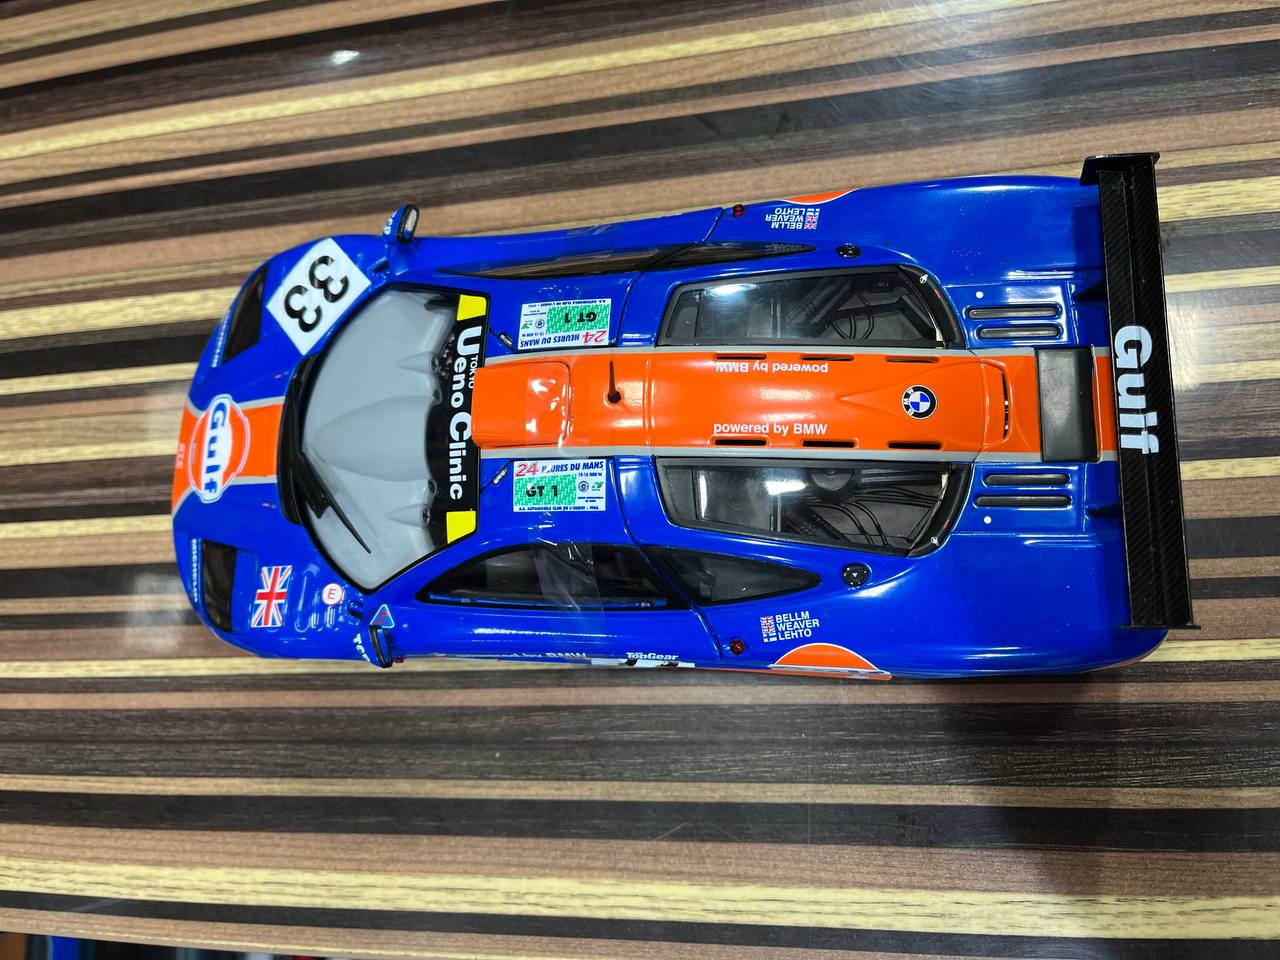 Solido McLaren F1 GTR - 1/18 Diecast Model, Partially Opening - Blue